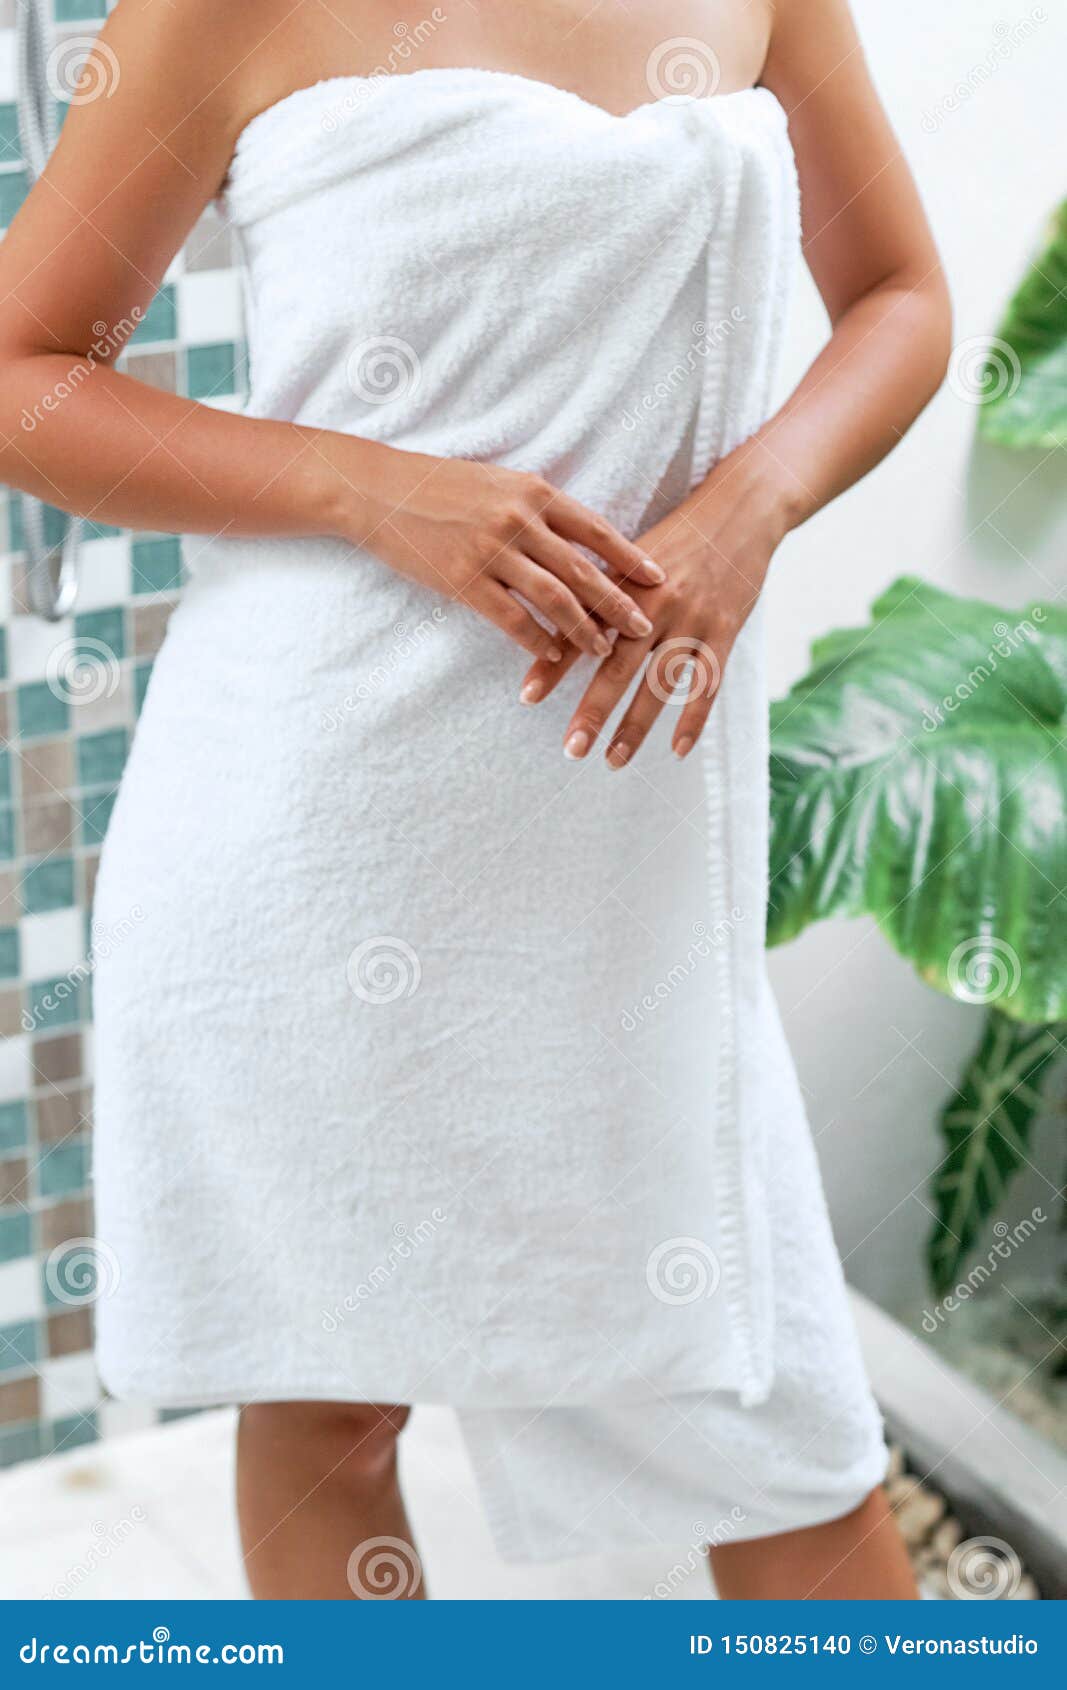 Слетело полотенце. Девушка в полотенце. Красивая девушка в полотенце. Девушка в белом полотенце. Фотосессия в полотенце.